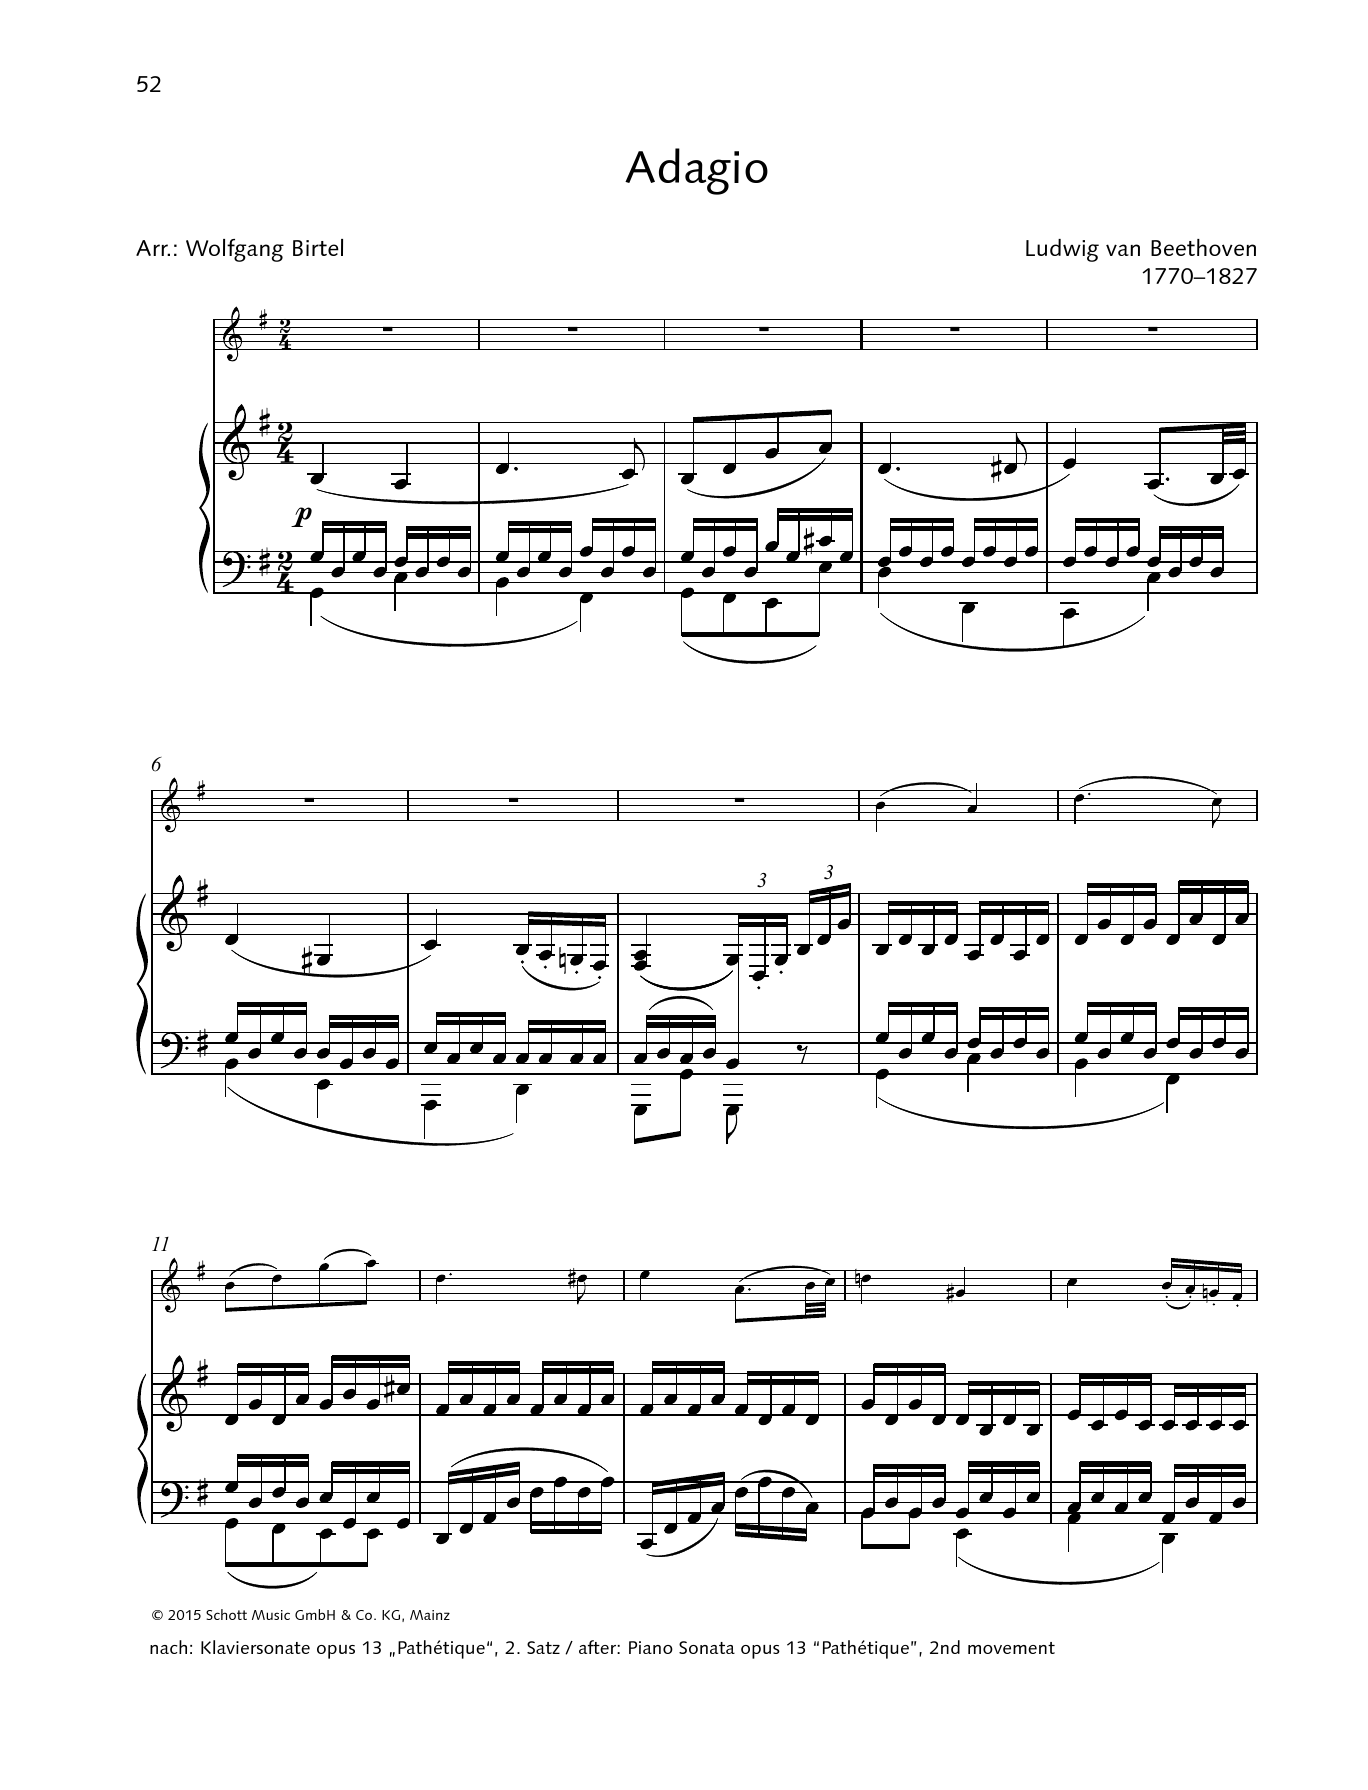 Download Ludwig van Beethoven Adagio Sheet Music